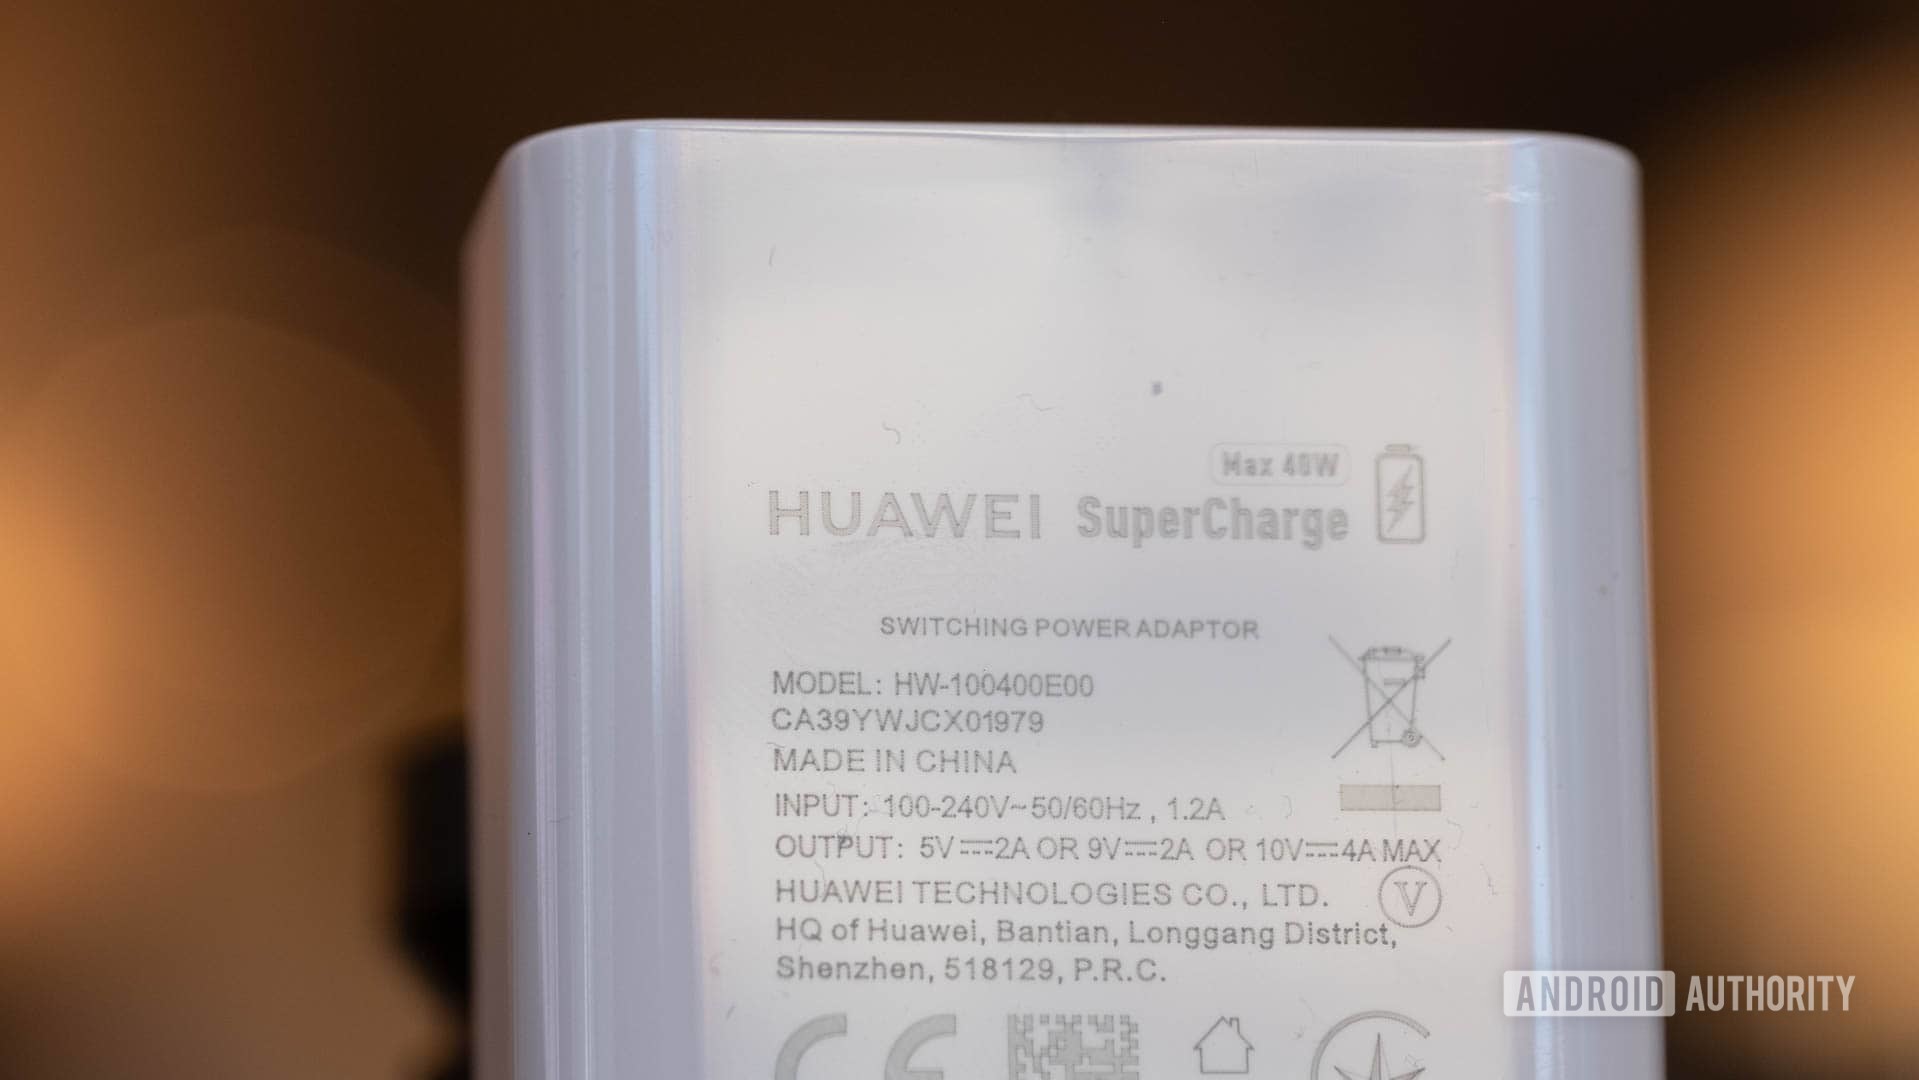 Huawei 40W charging brick